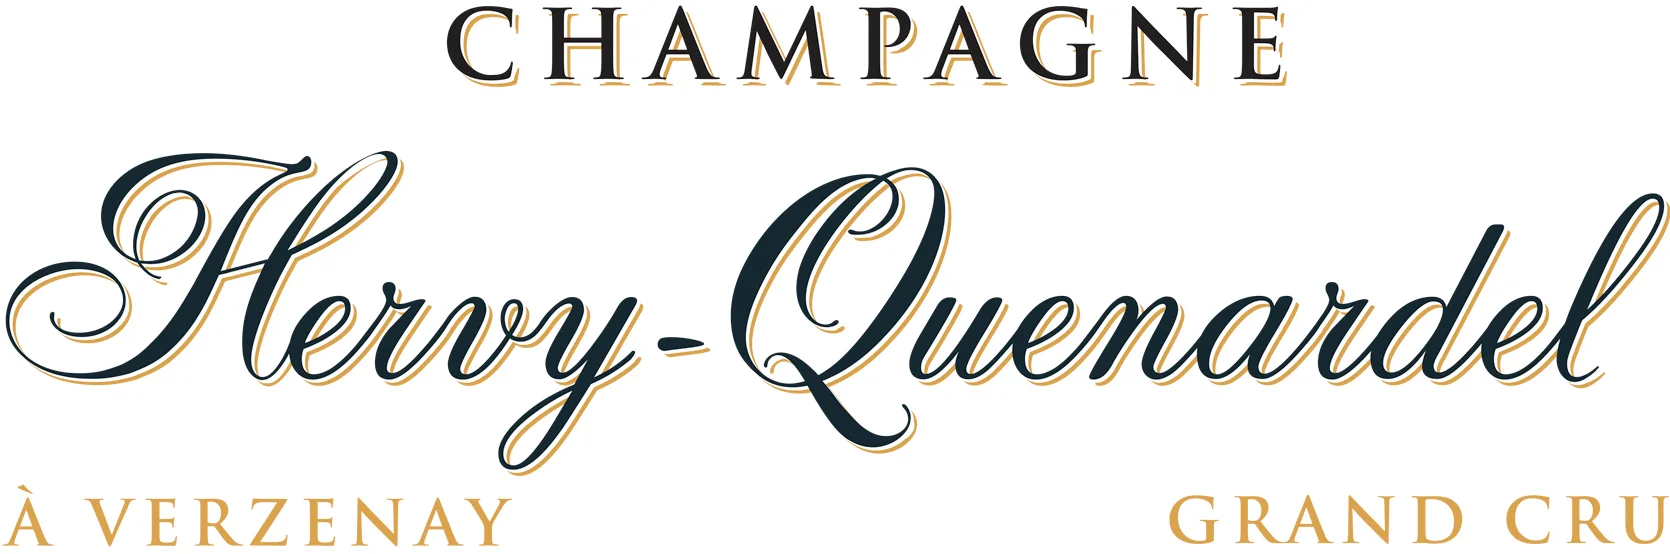 Champagne Hervy-Quenardel